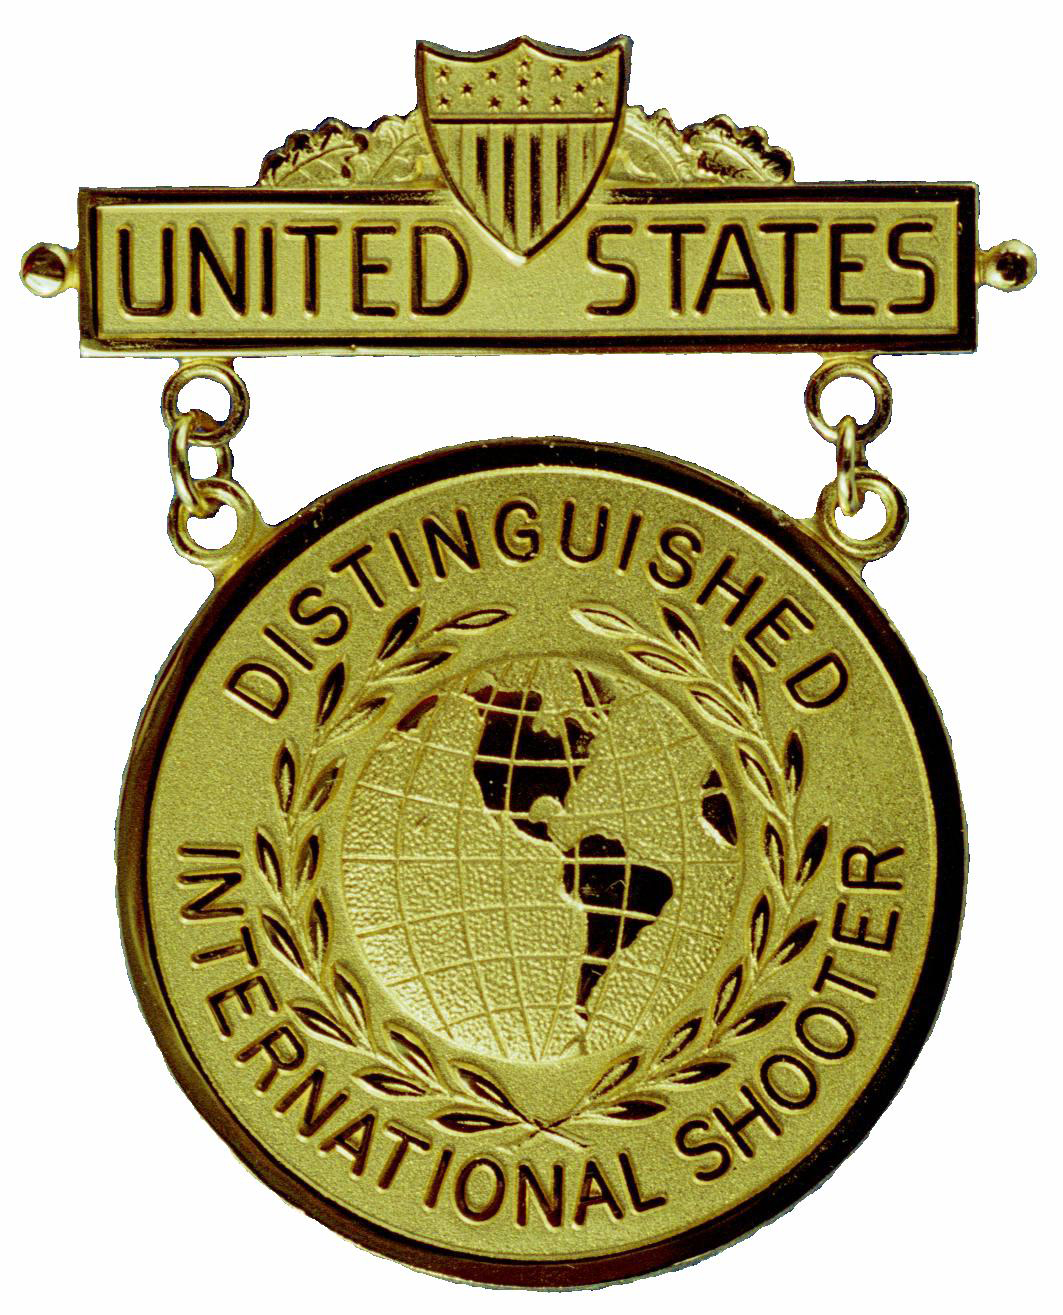 Distinguished Badge Program - Civilian Marksmanship Program